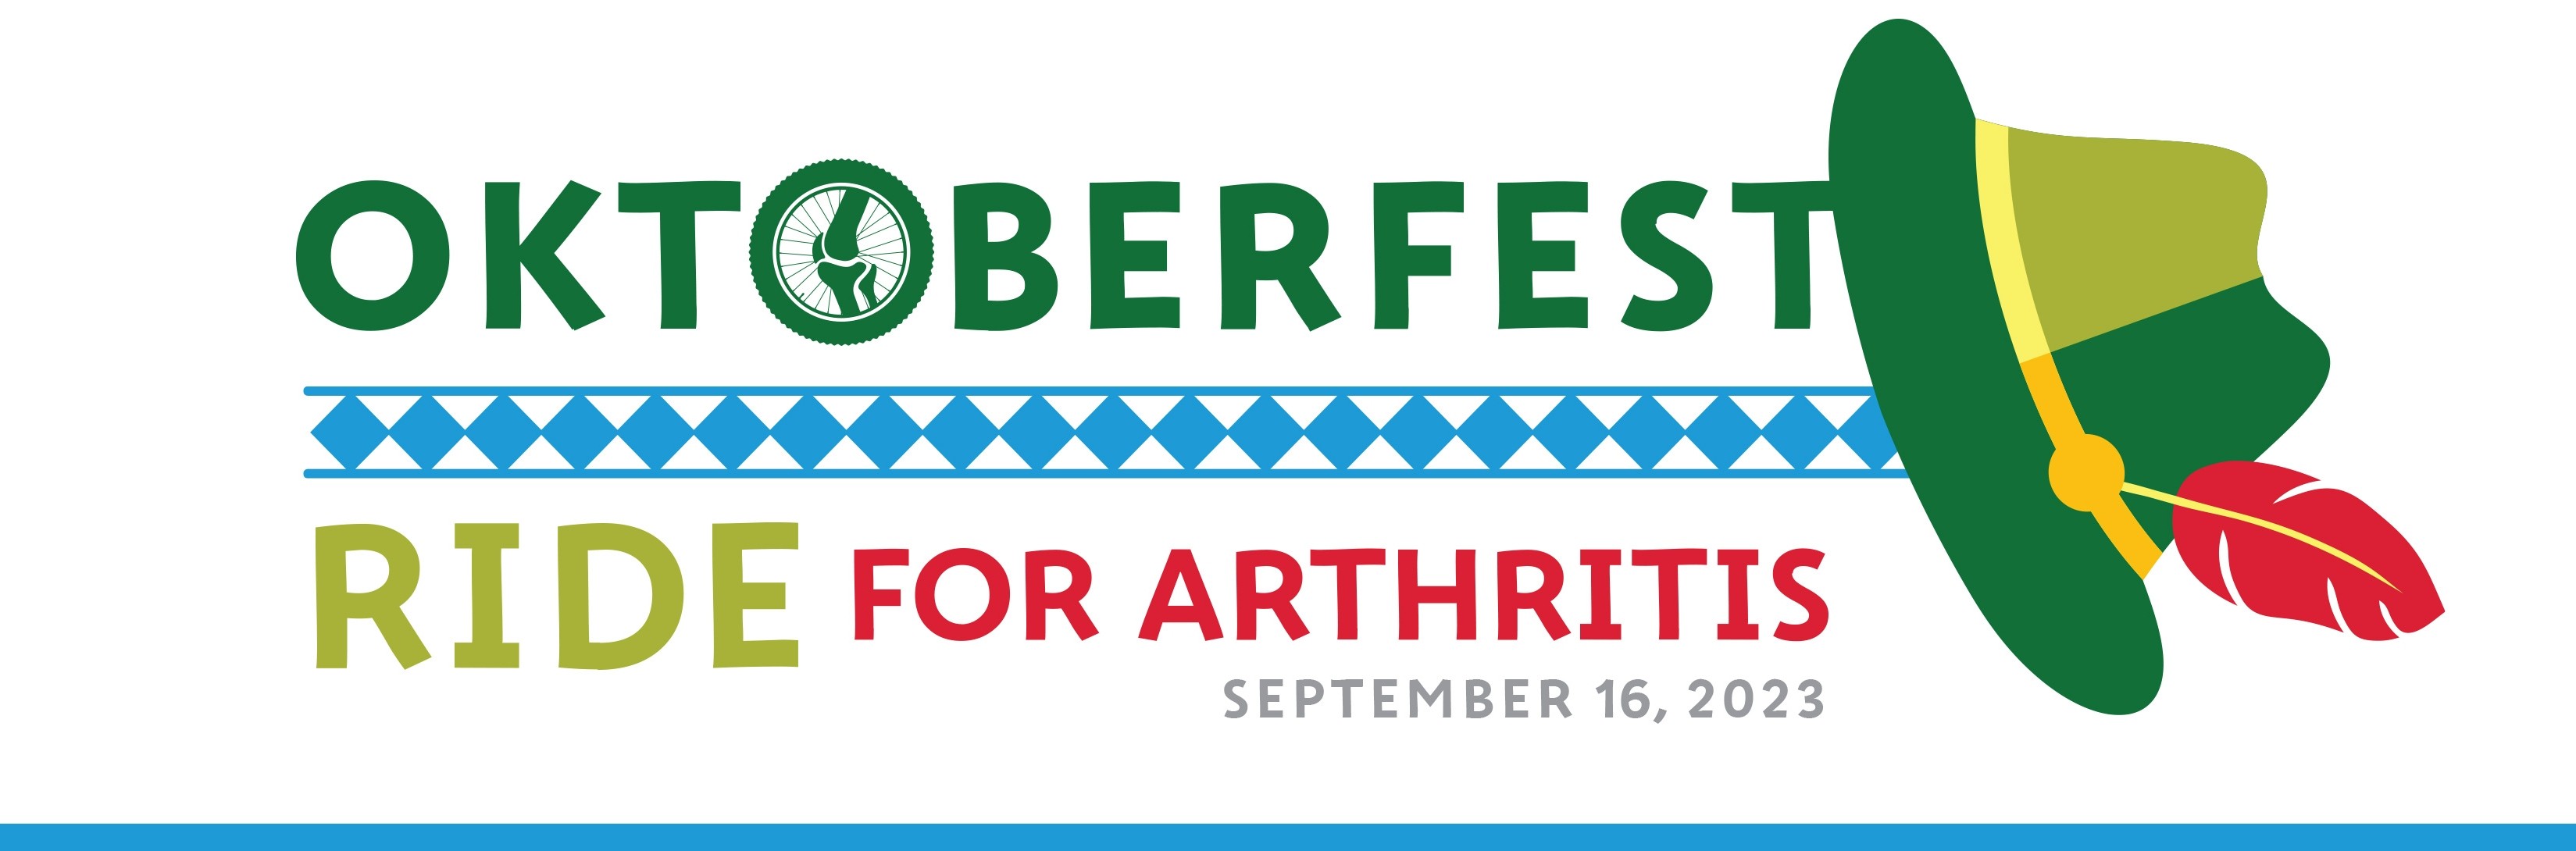 2023 Oktoberfest Ride for Arthritis